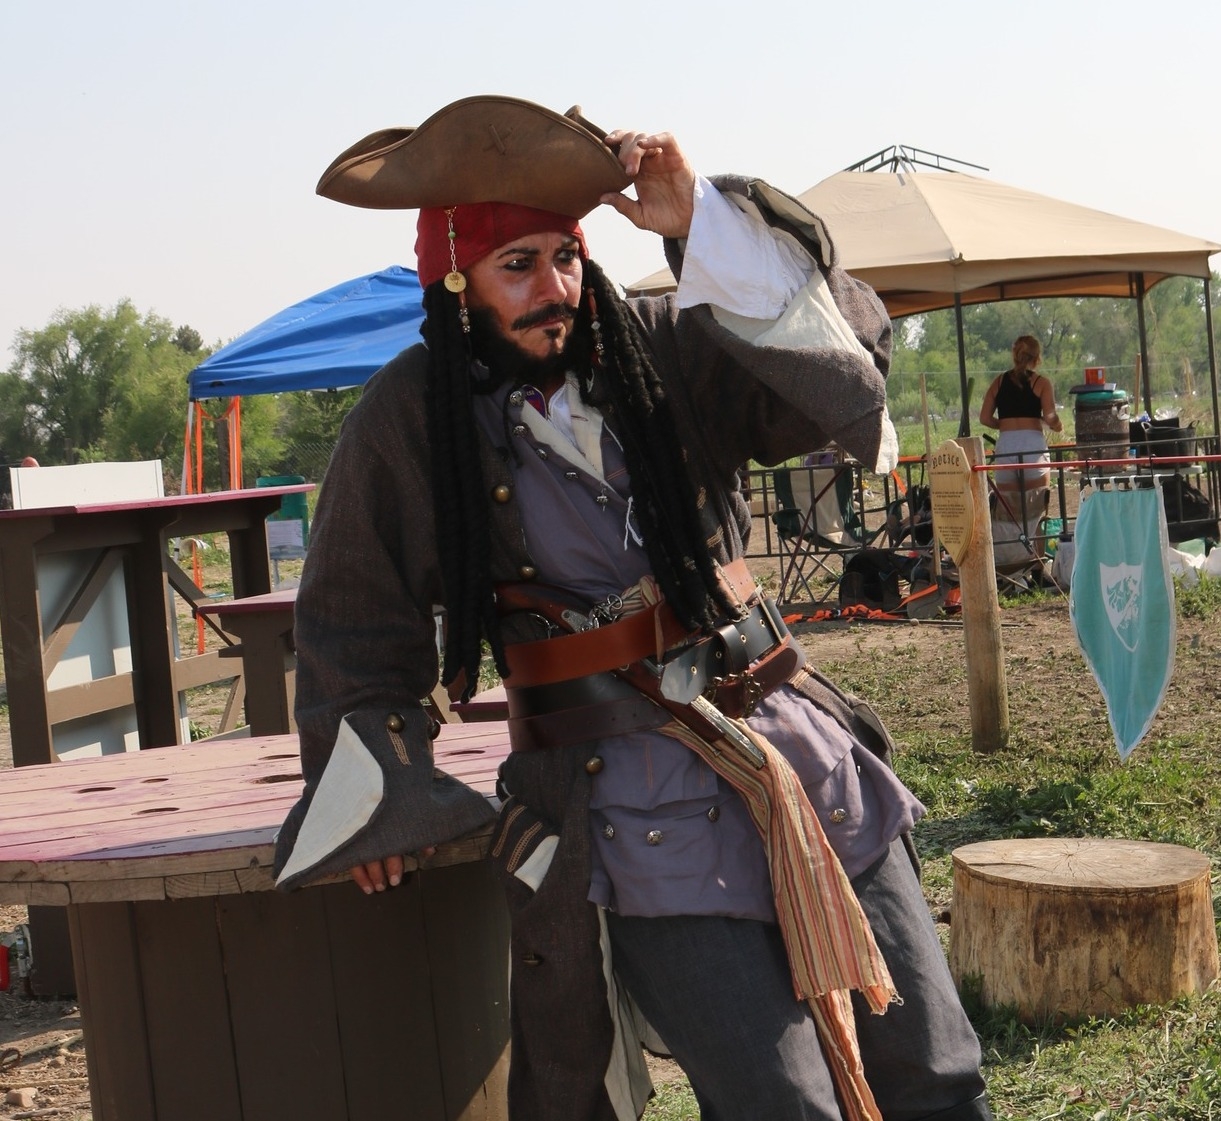 Pirate weekend at the Utah Renaissance Festival - Marriott-Slaterville, UT